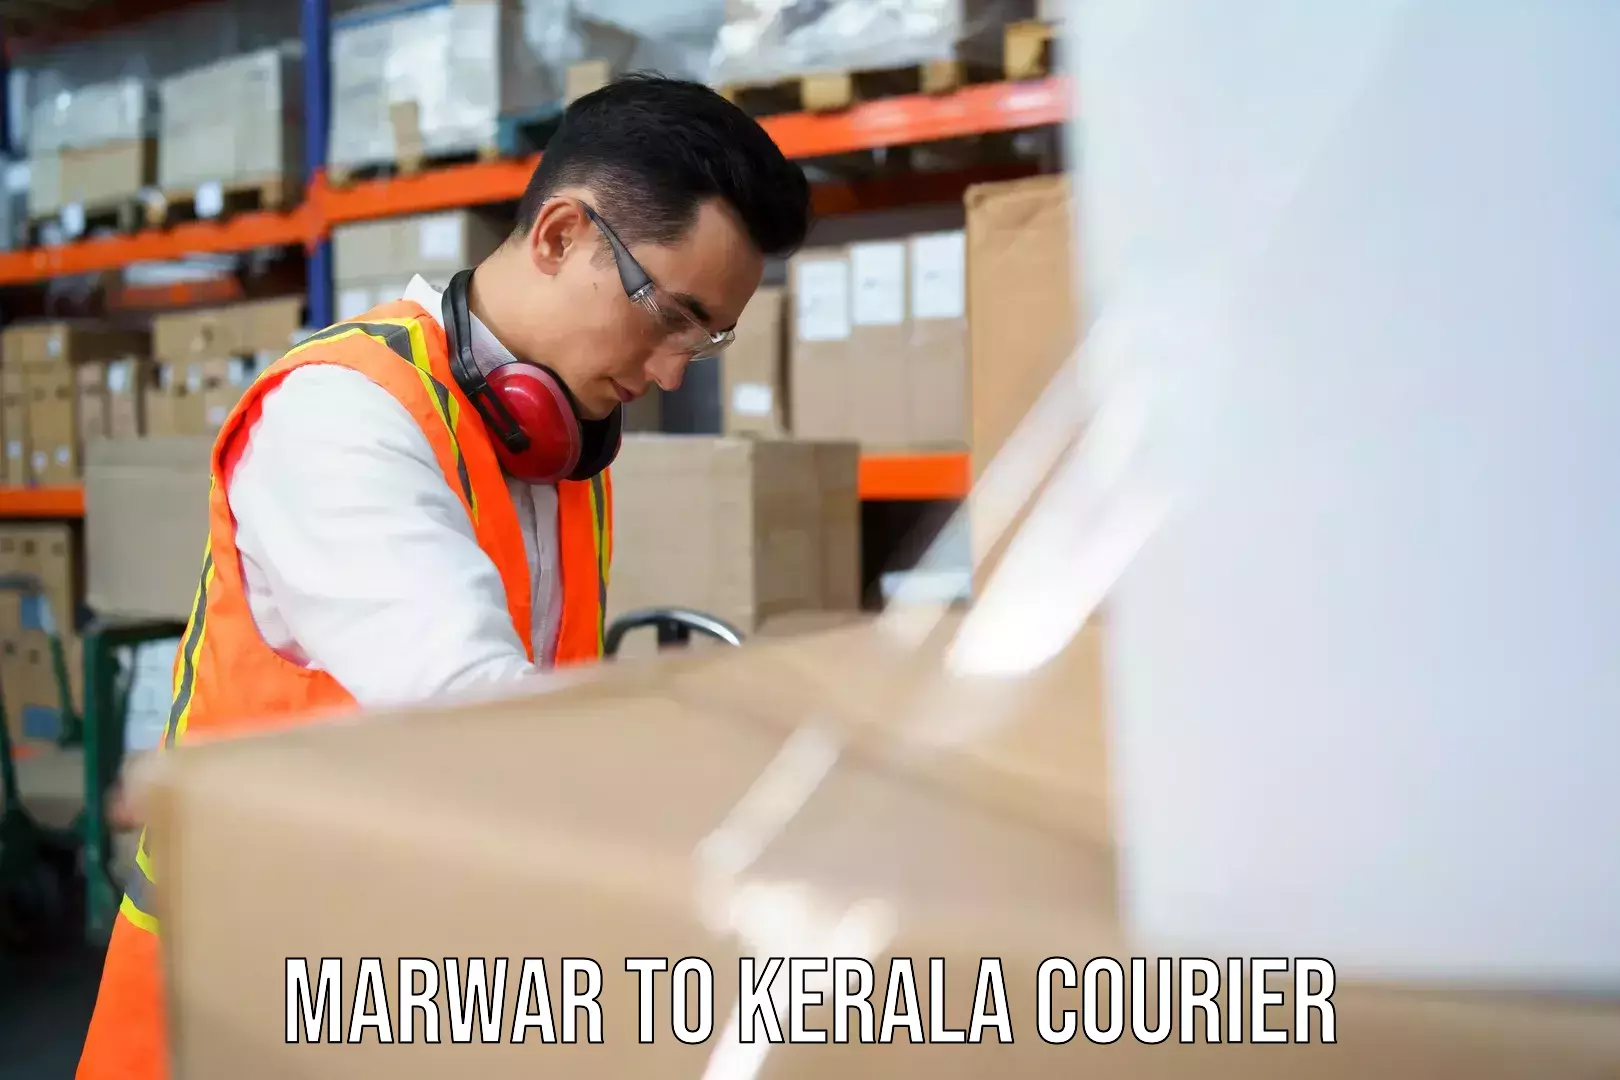 Expedited shipping methods Marwar to Kerala